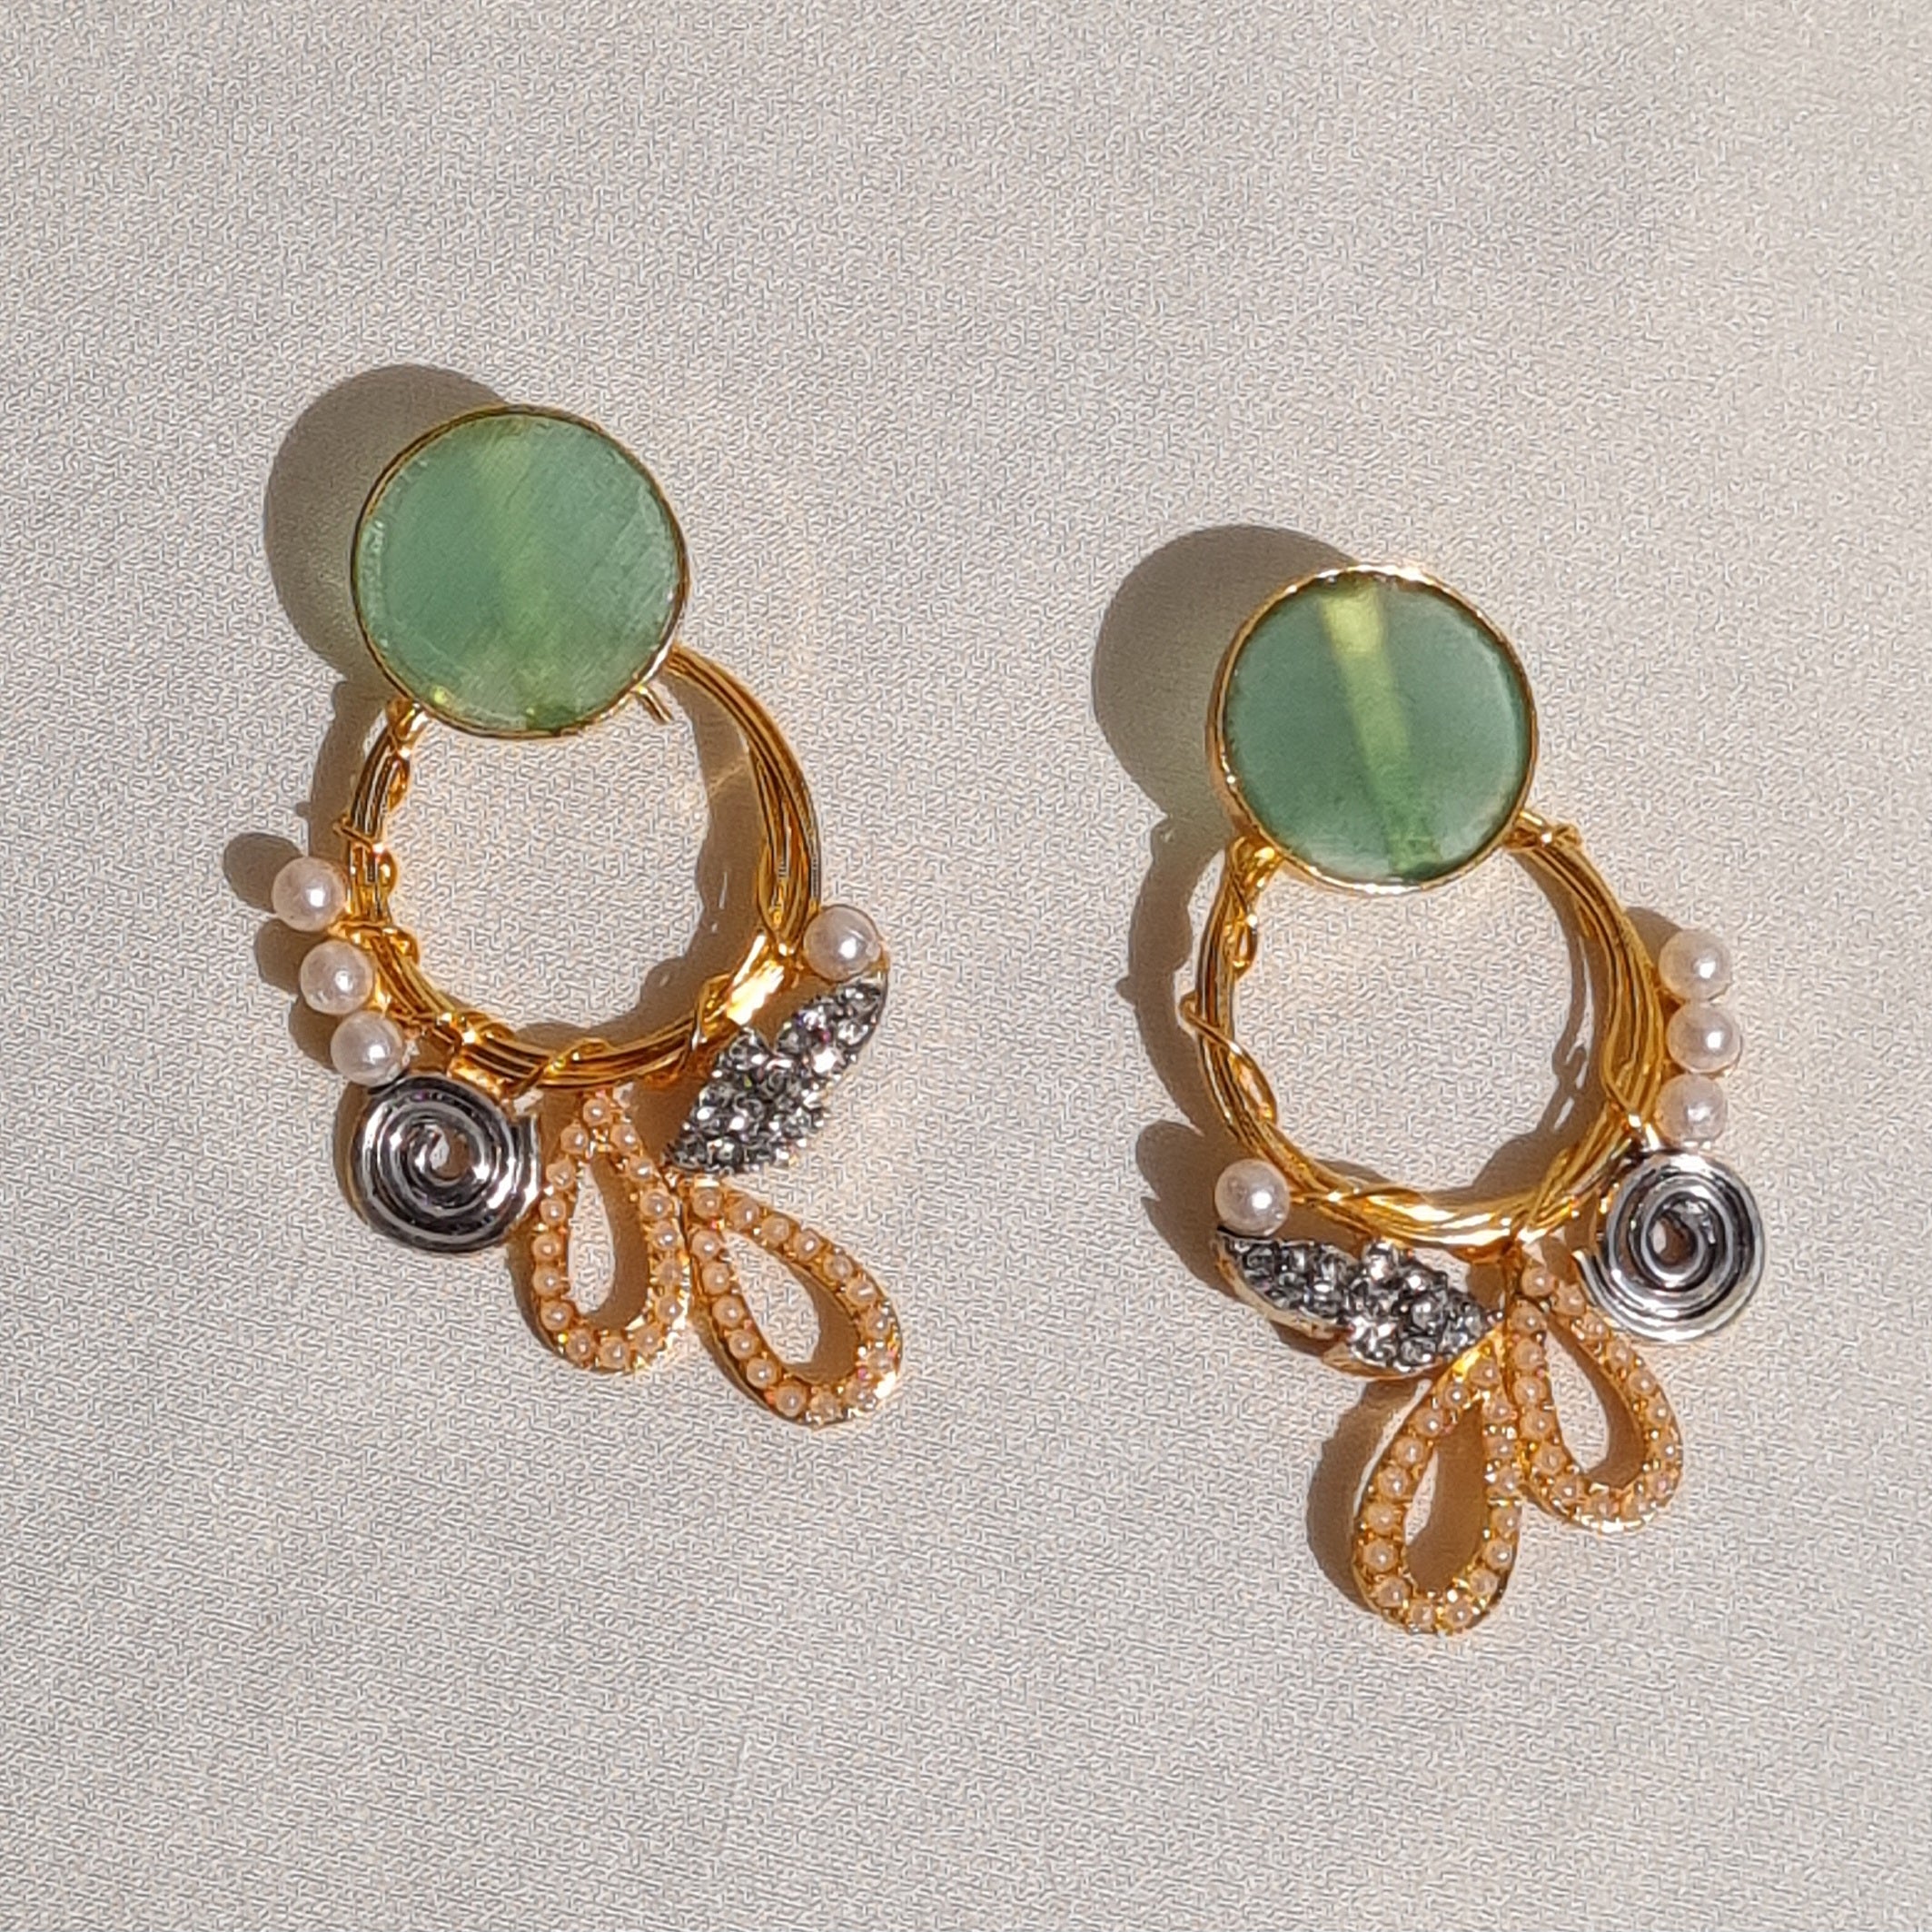 Sea Green Gemstone hand made syrian earrings